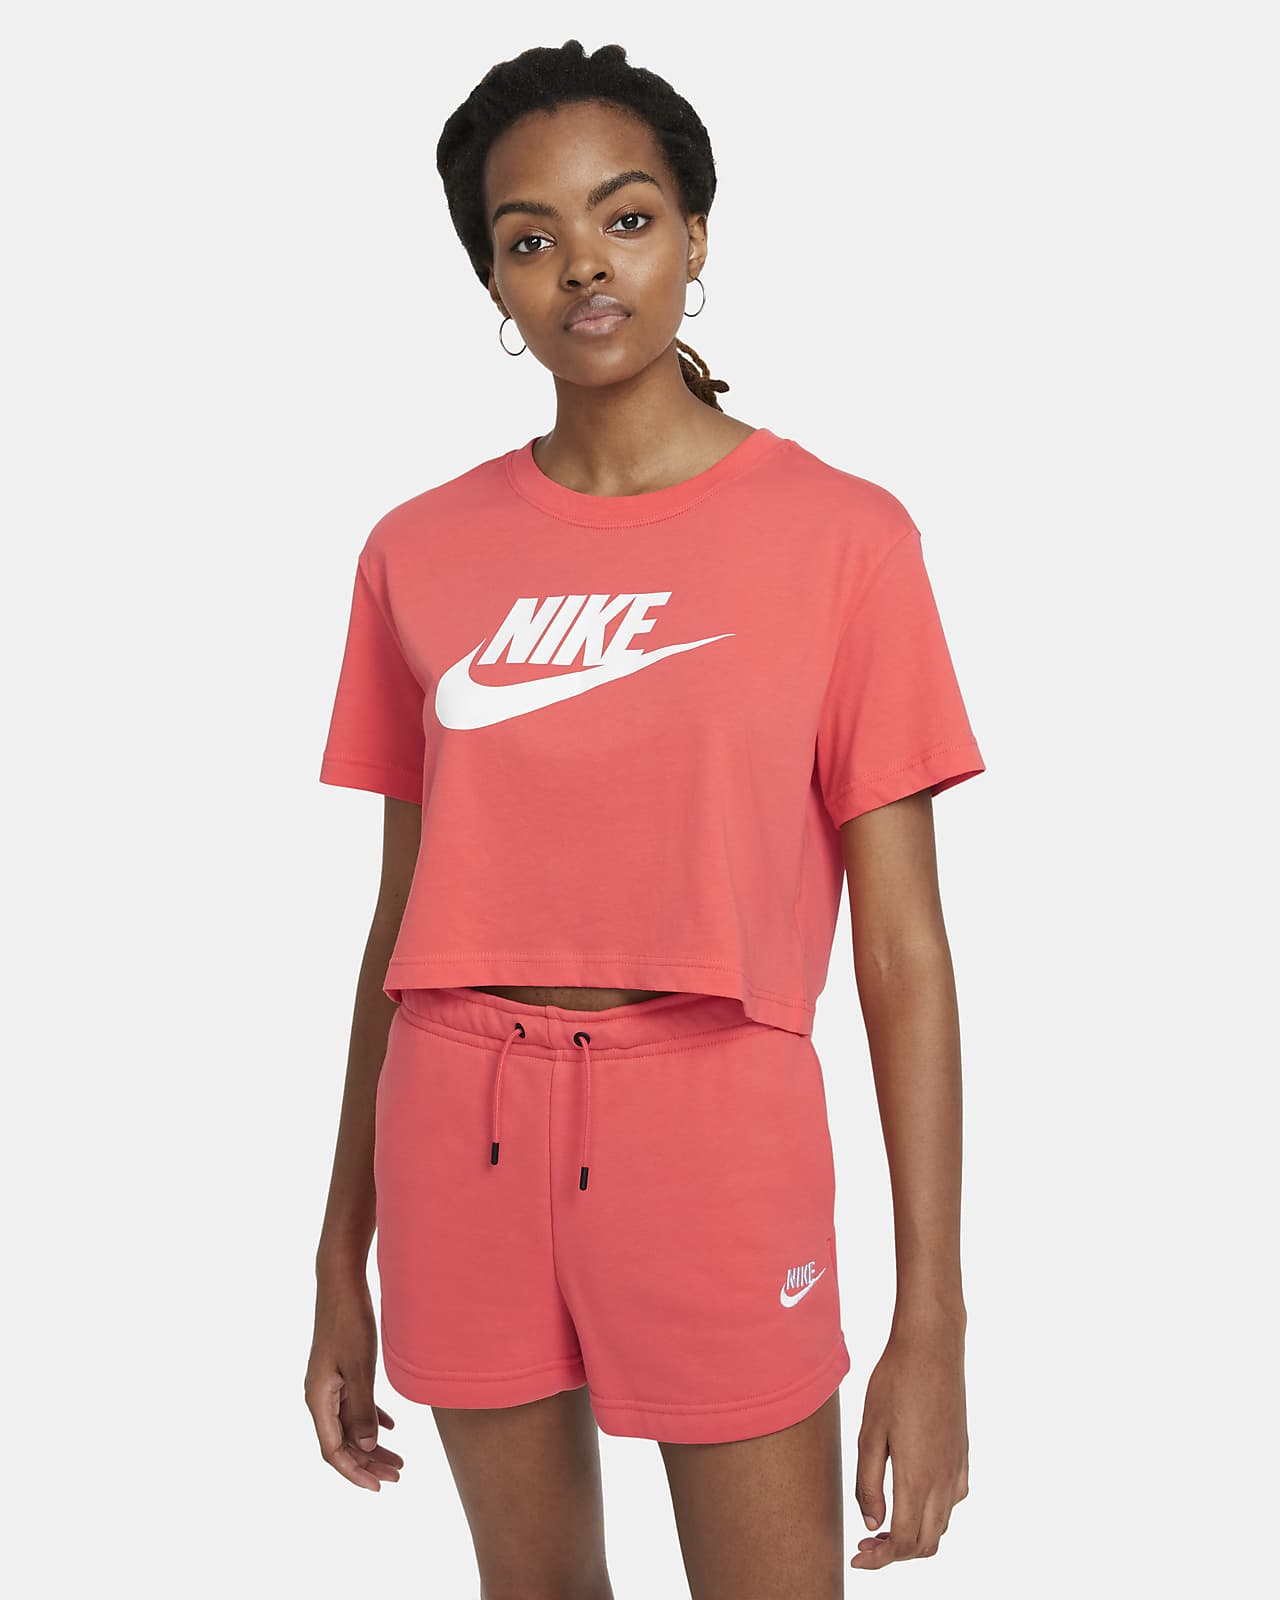 https://www.ekinsport.com/media/catalog/product/b/v/bv6175-814_t-shirt-nike-sportswear-essential-orange-pour-femme-bv6175-814_01_5.jpeg